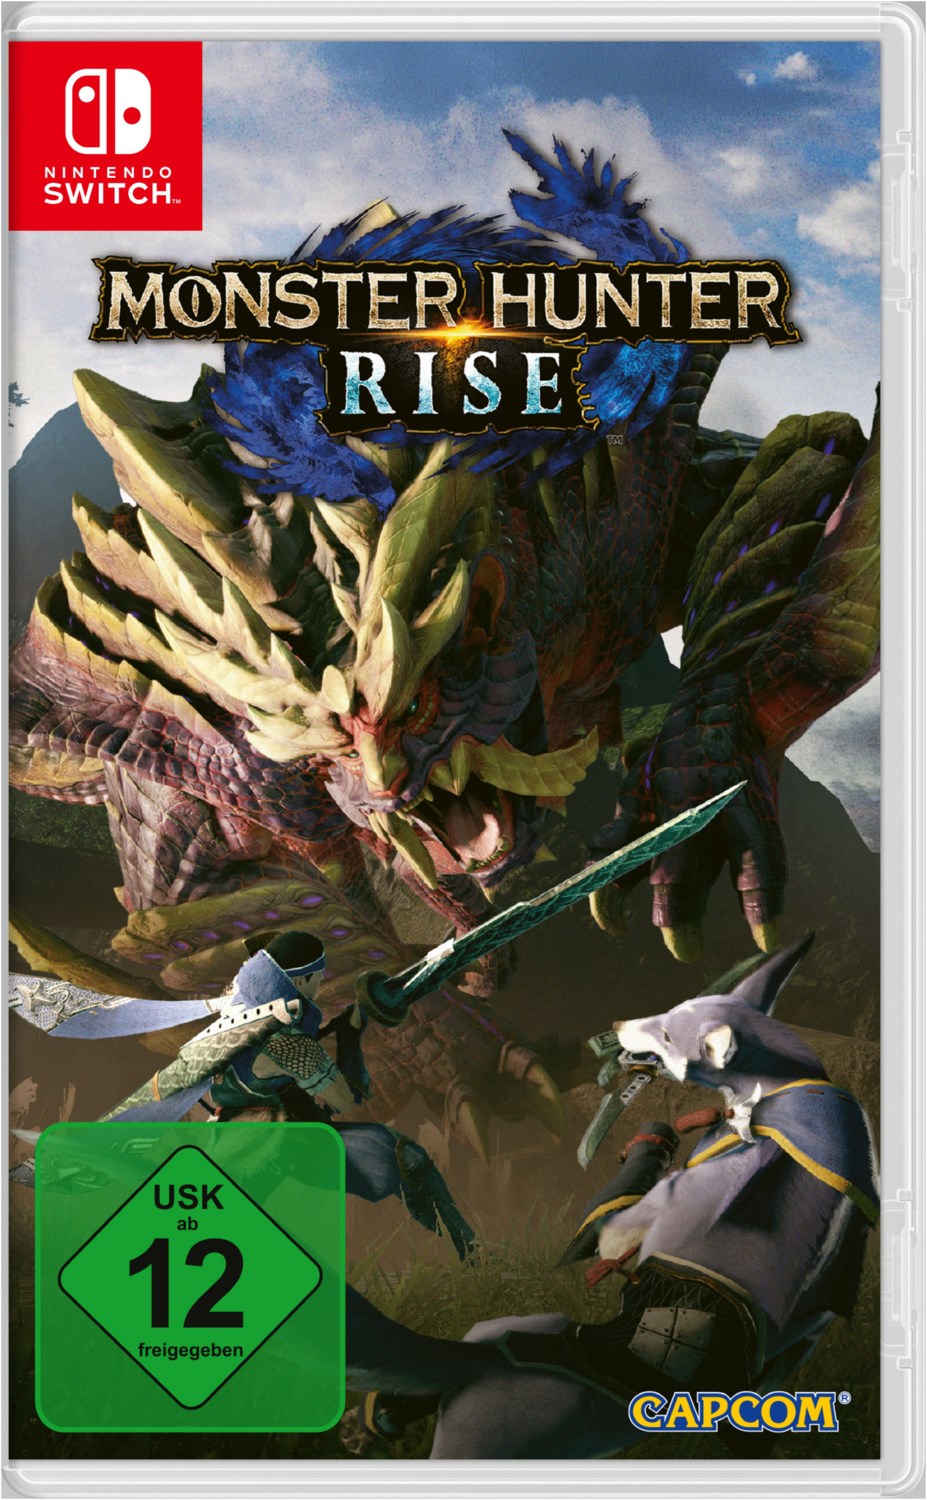 Image of Monster Hunter Rise - Nintendo Switch - Mehrsprachig (1006110)